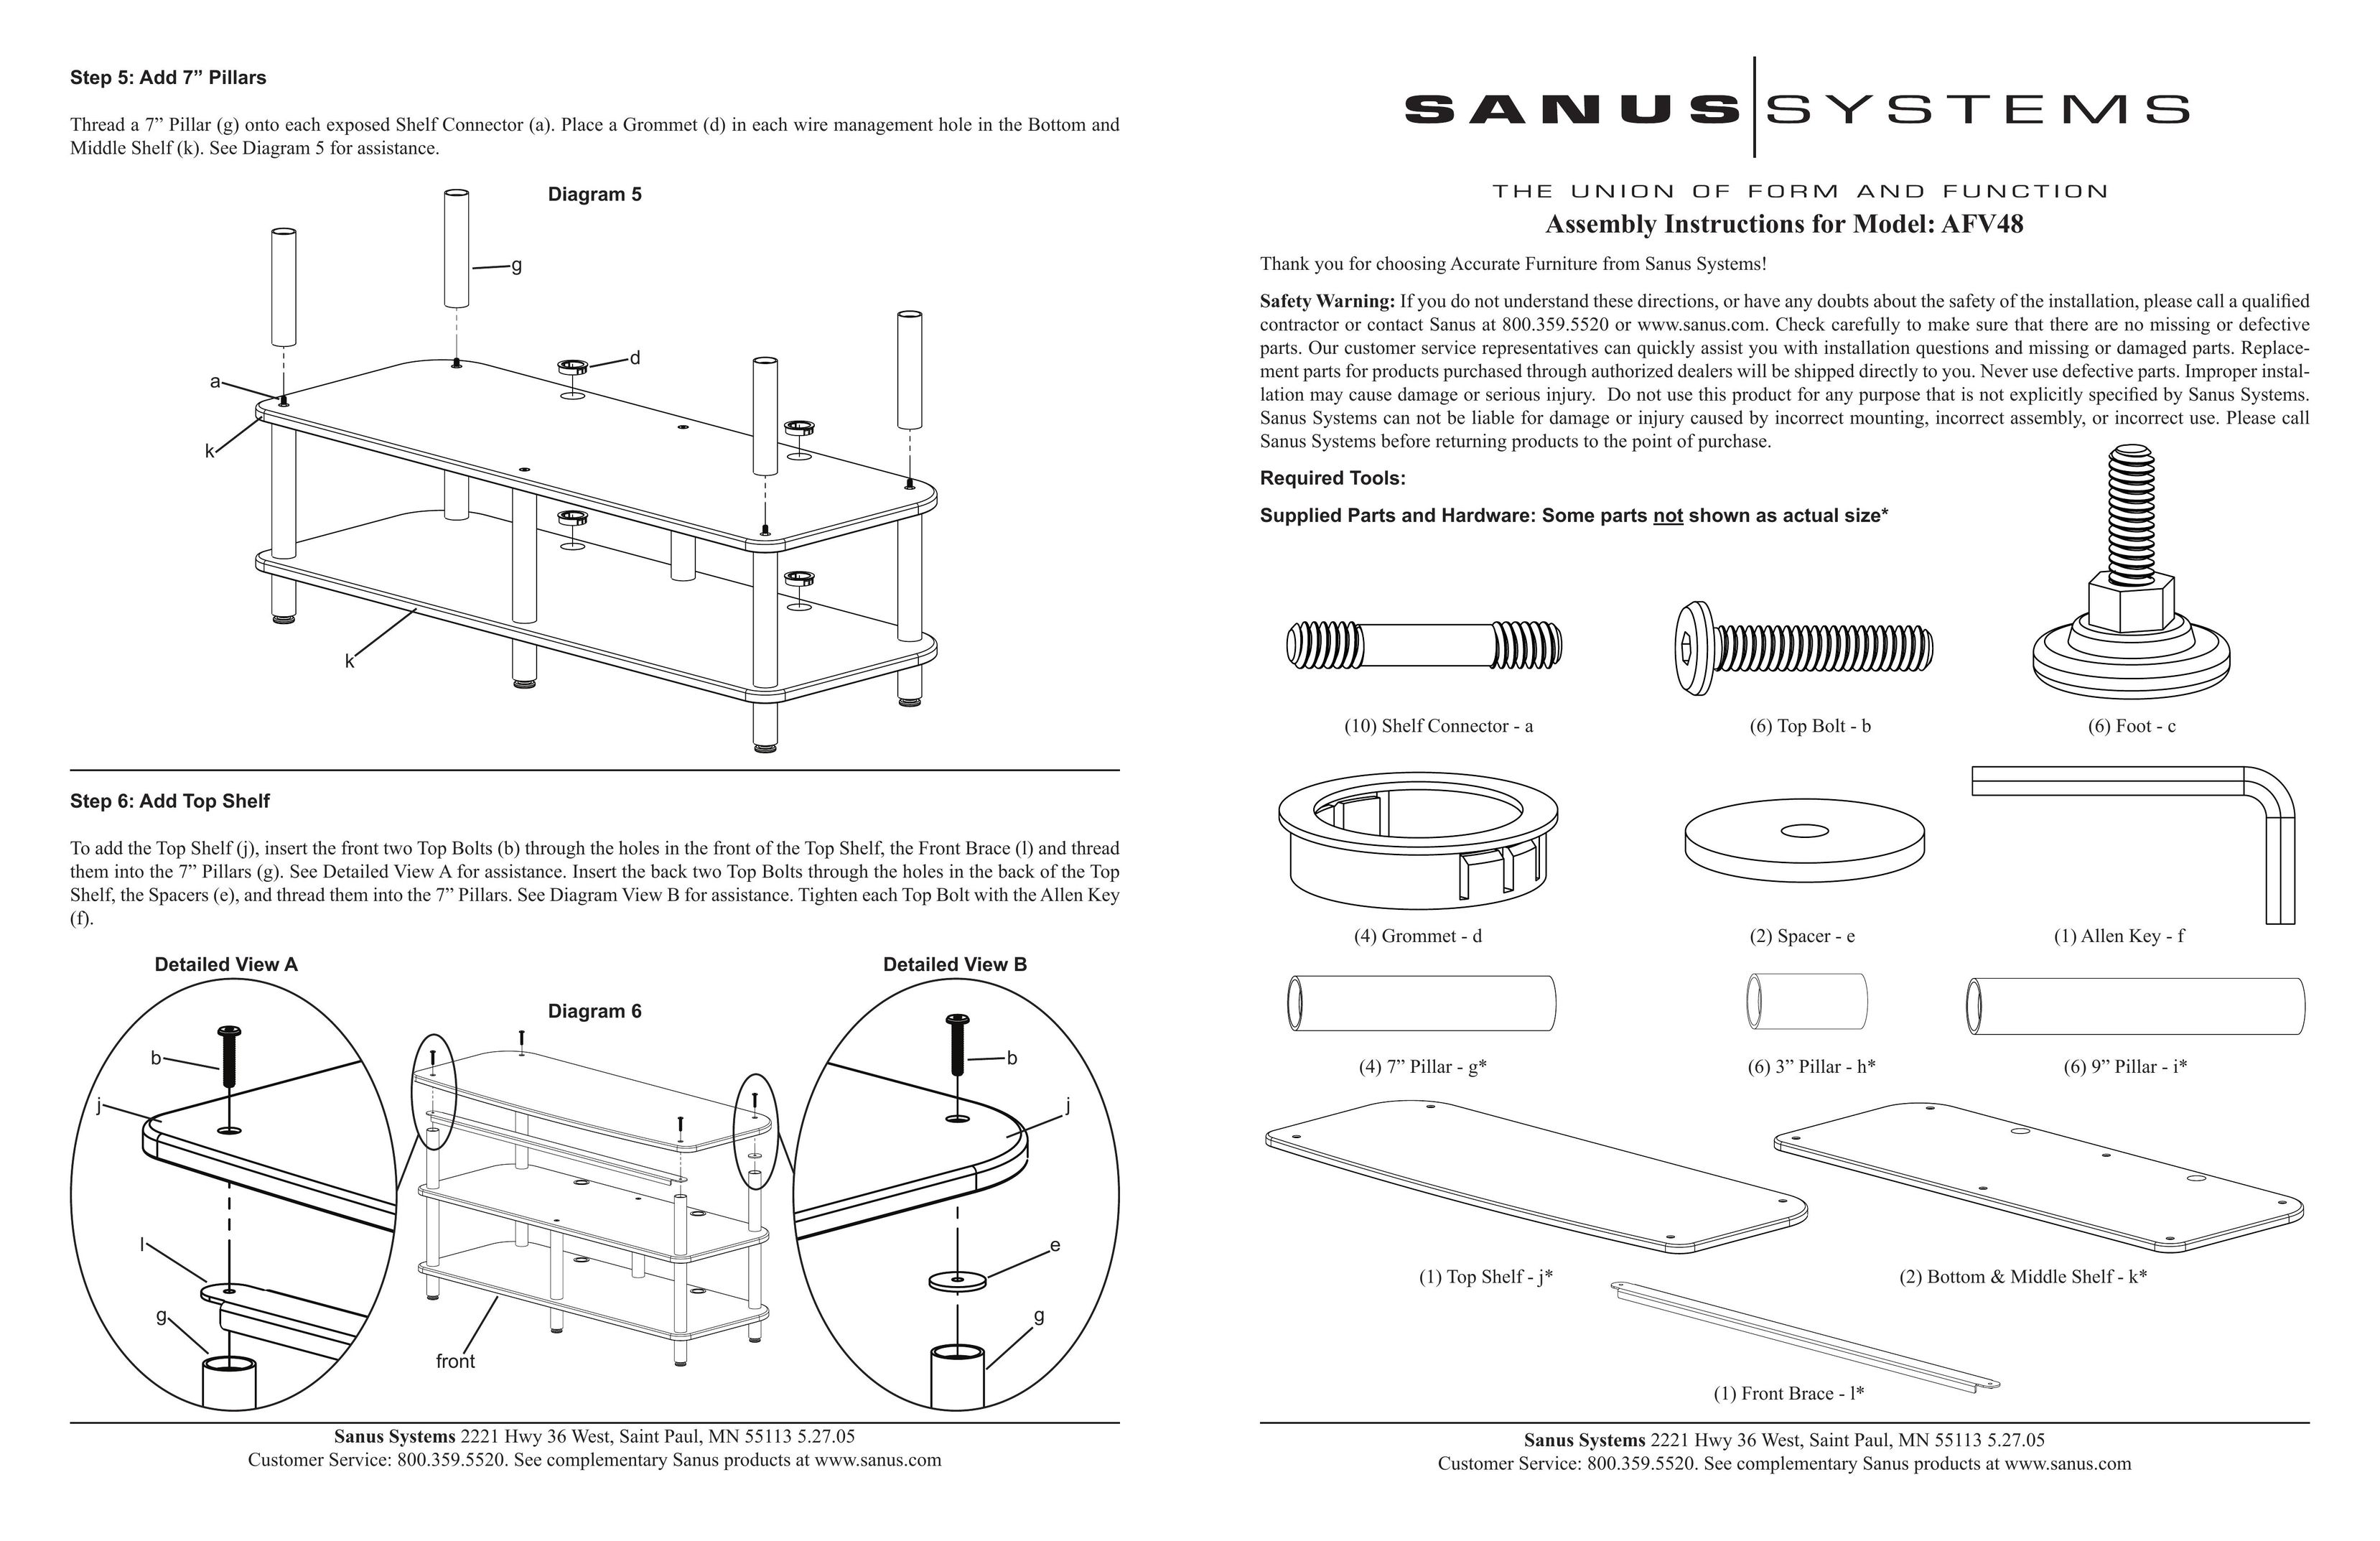 Sanus Systems AFV48 Indoor Furnishings User Manual